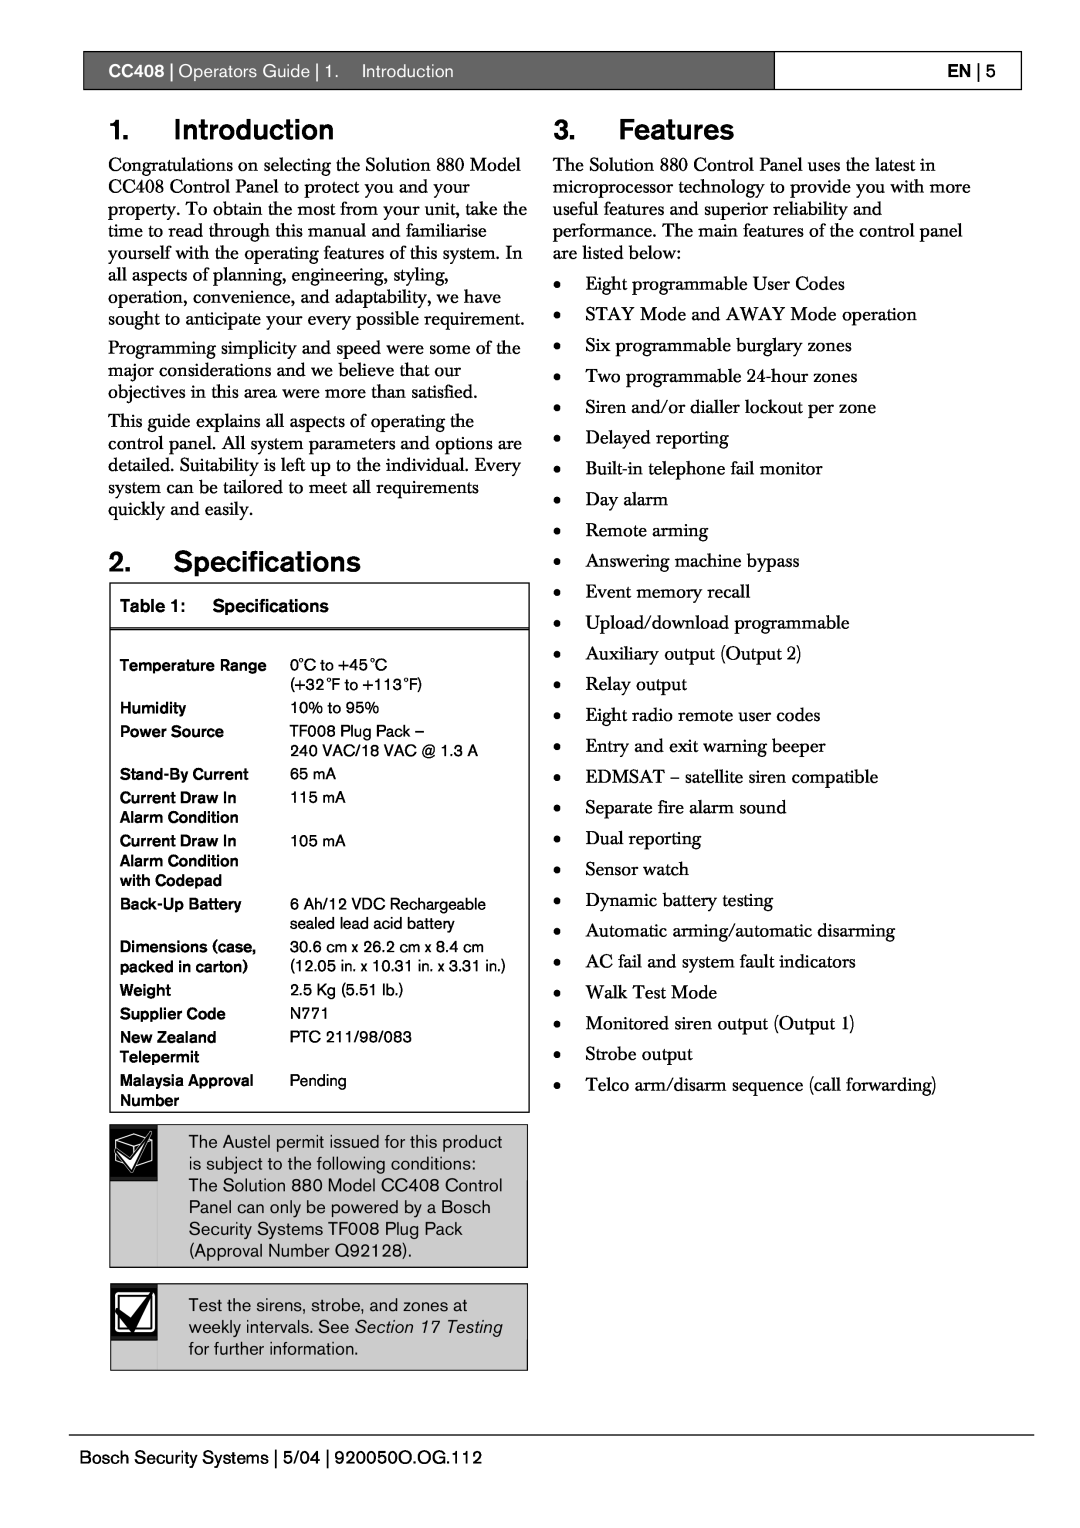 Bosch Appliances manual Specifications, Features, CC408 Operators Guide 1. Introduction, En 